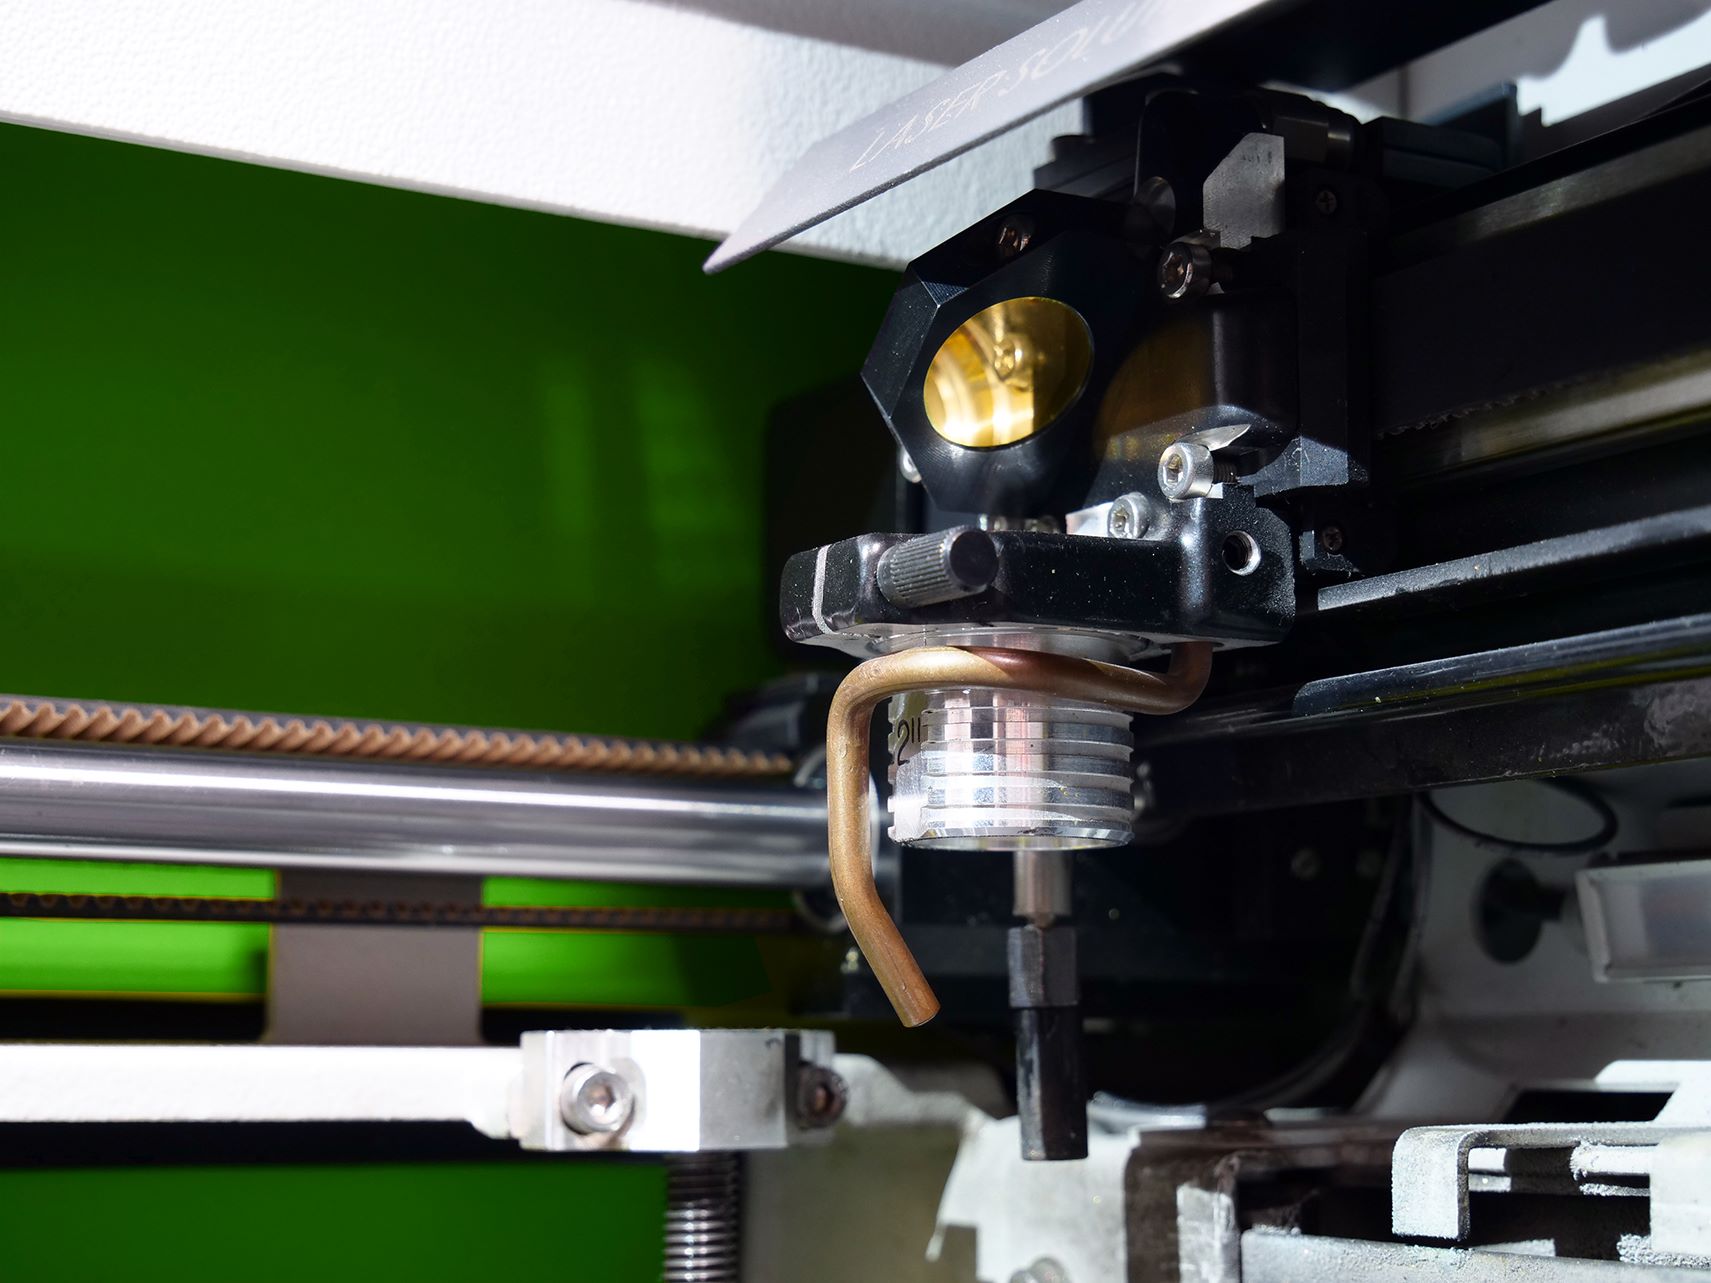 Gravotech LS100 CO2 Laser Engraving Machine (New) Item # GV-201010